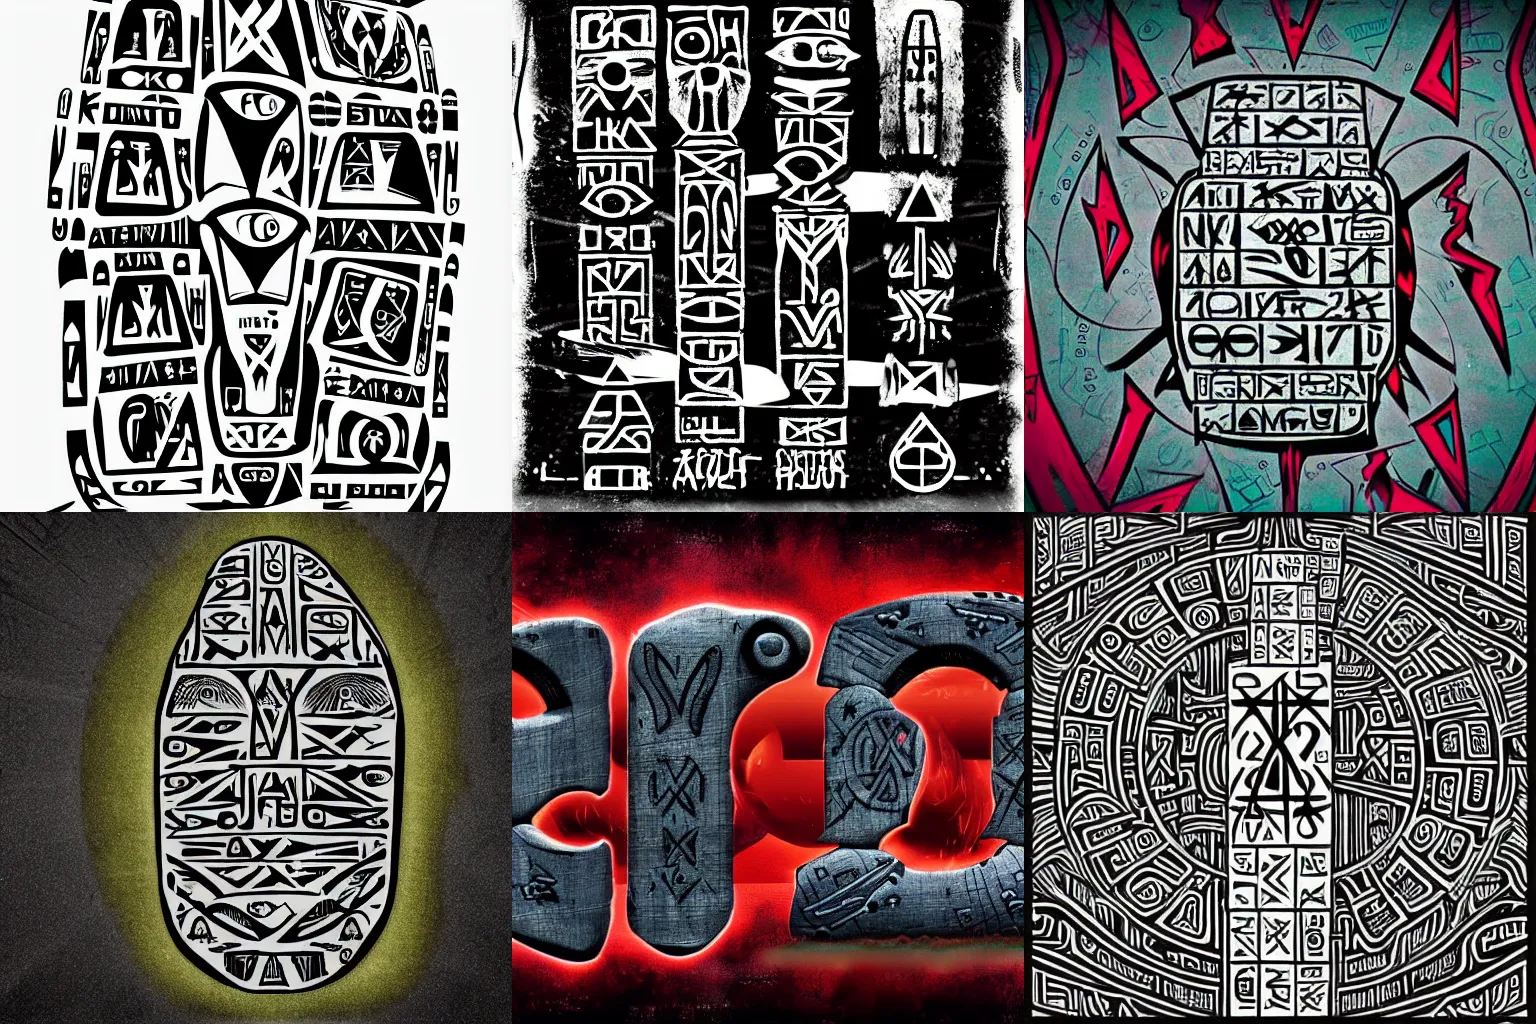 Prompt: Moai menhirs and futhark runes, sci-fi futuristic graffiti calligraphy, cartoon digital art